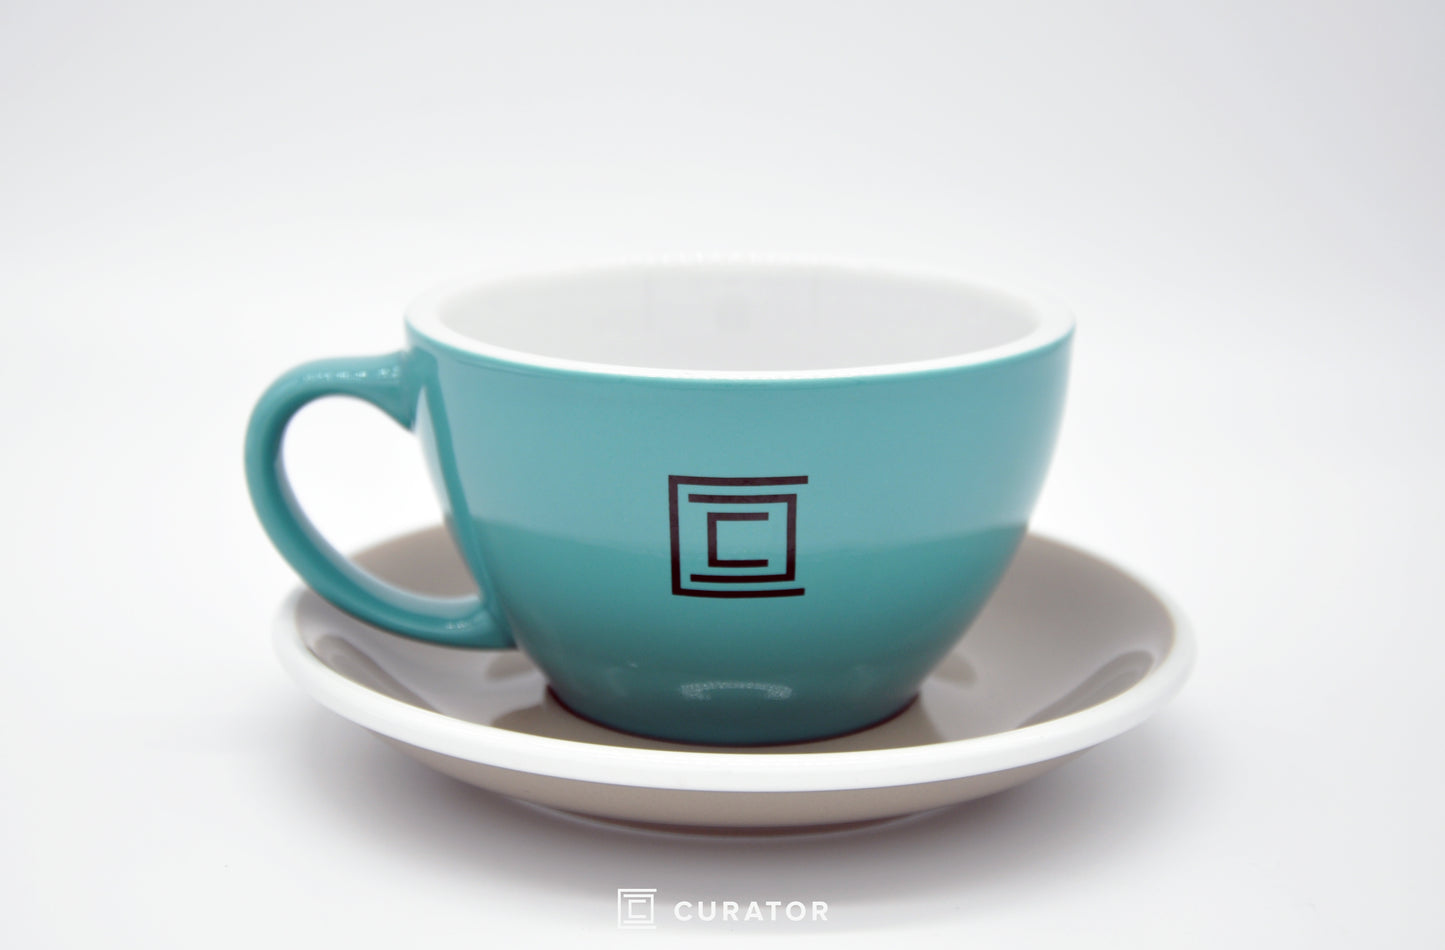 CURATOR x Loveramics Cafe Latte Cup & Saucer Set (300 ml)